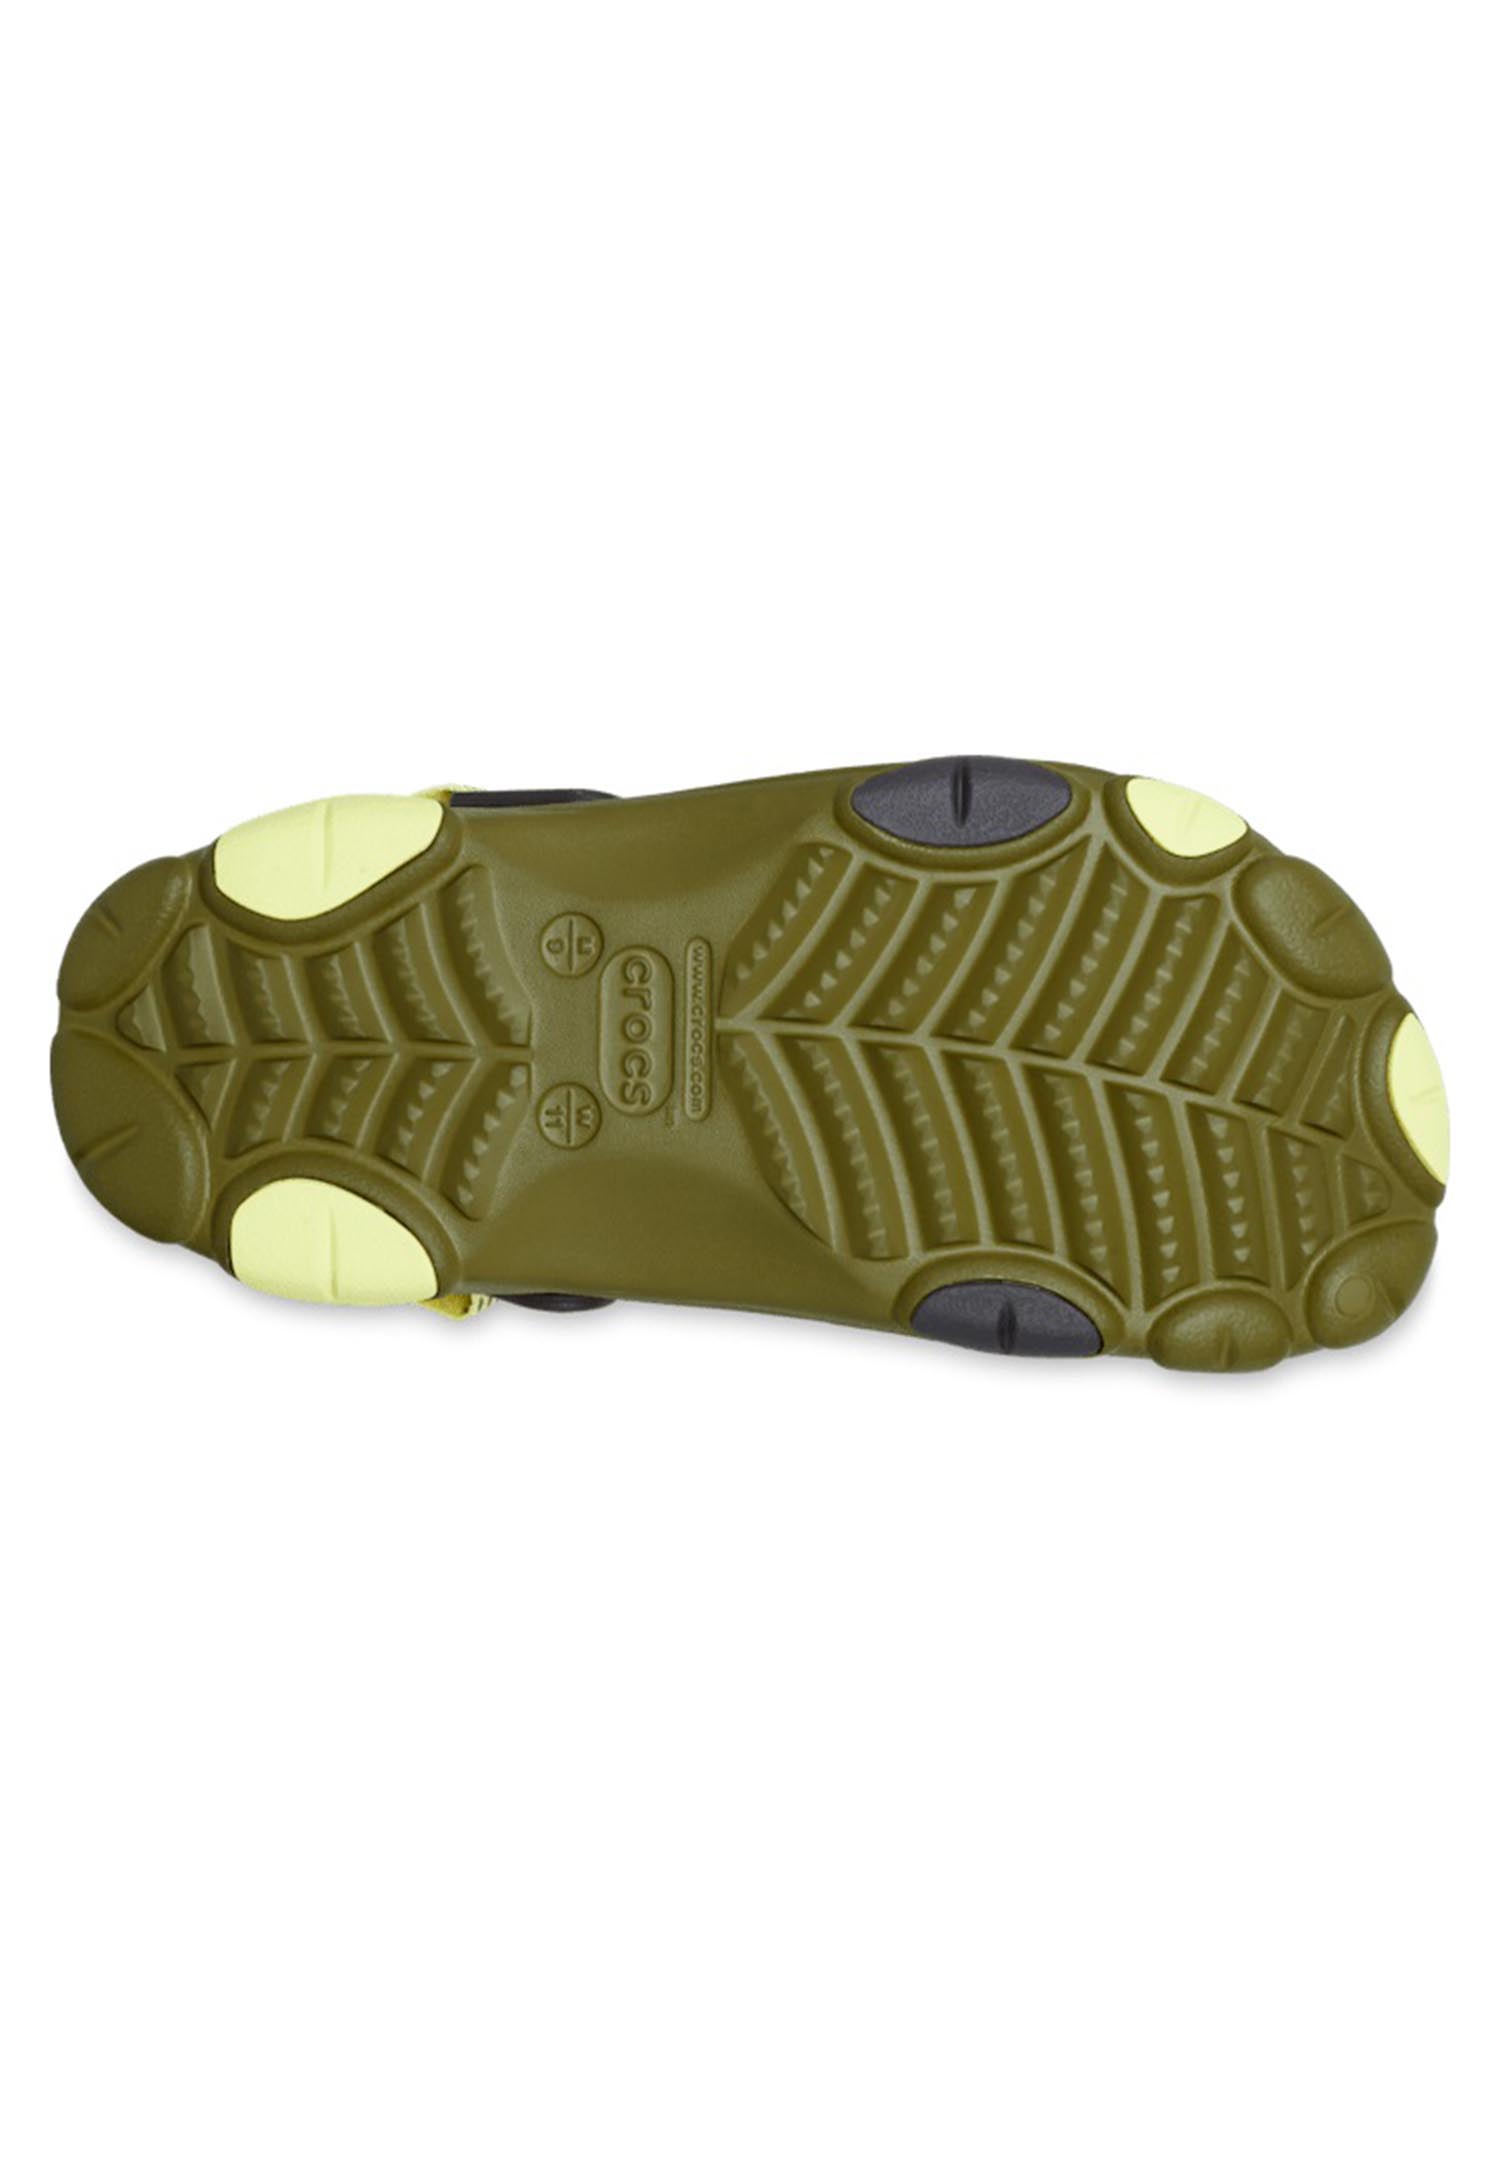 Crocs Classic All Terrain Clog Roomy Fit Unisex Sandale Hausschuh 206340 grün